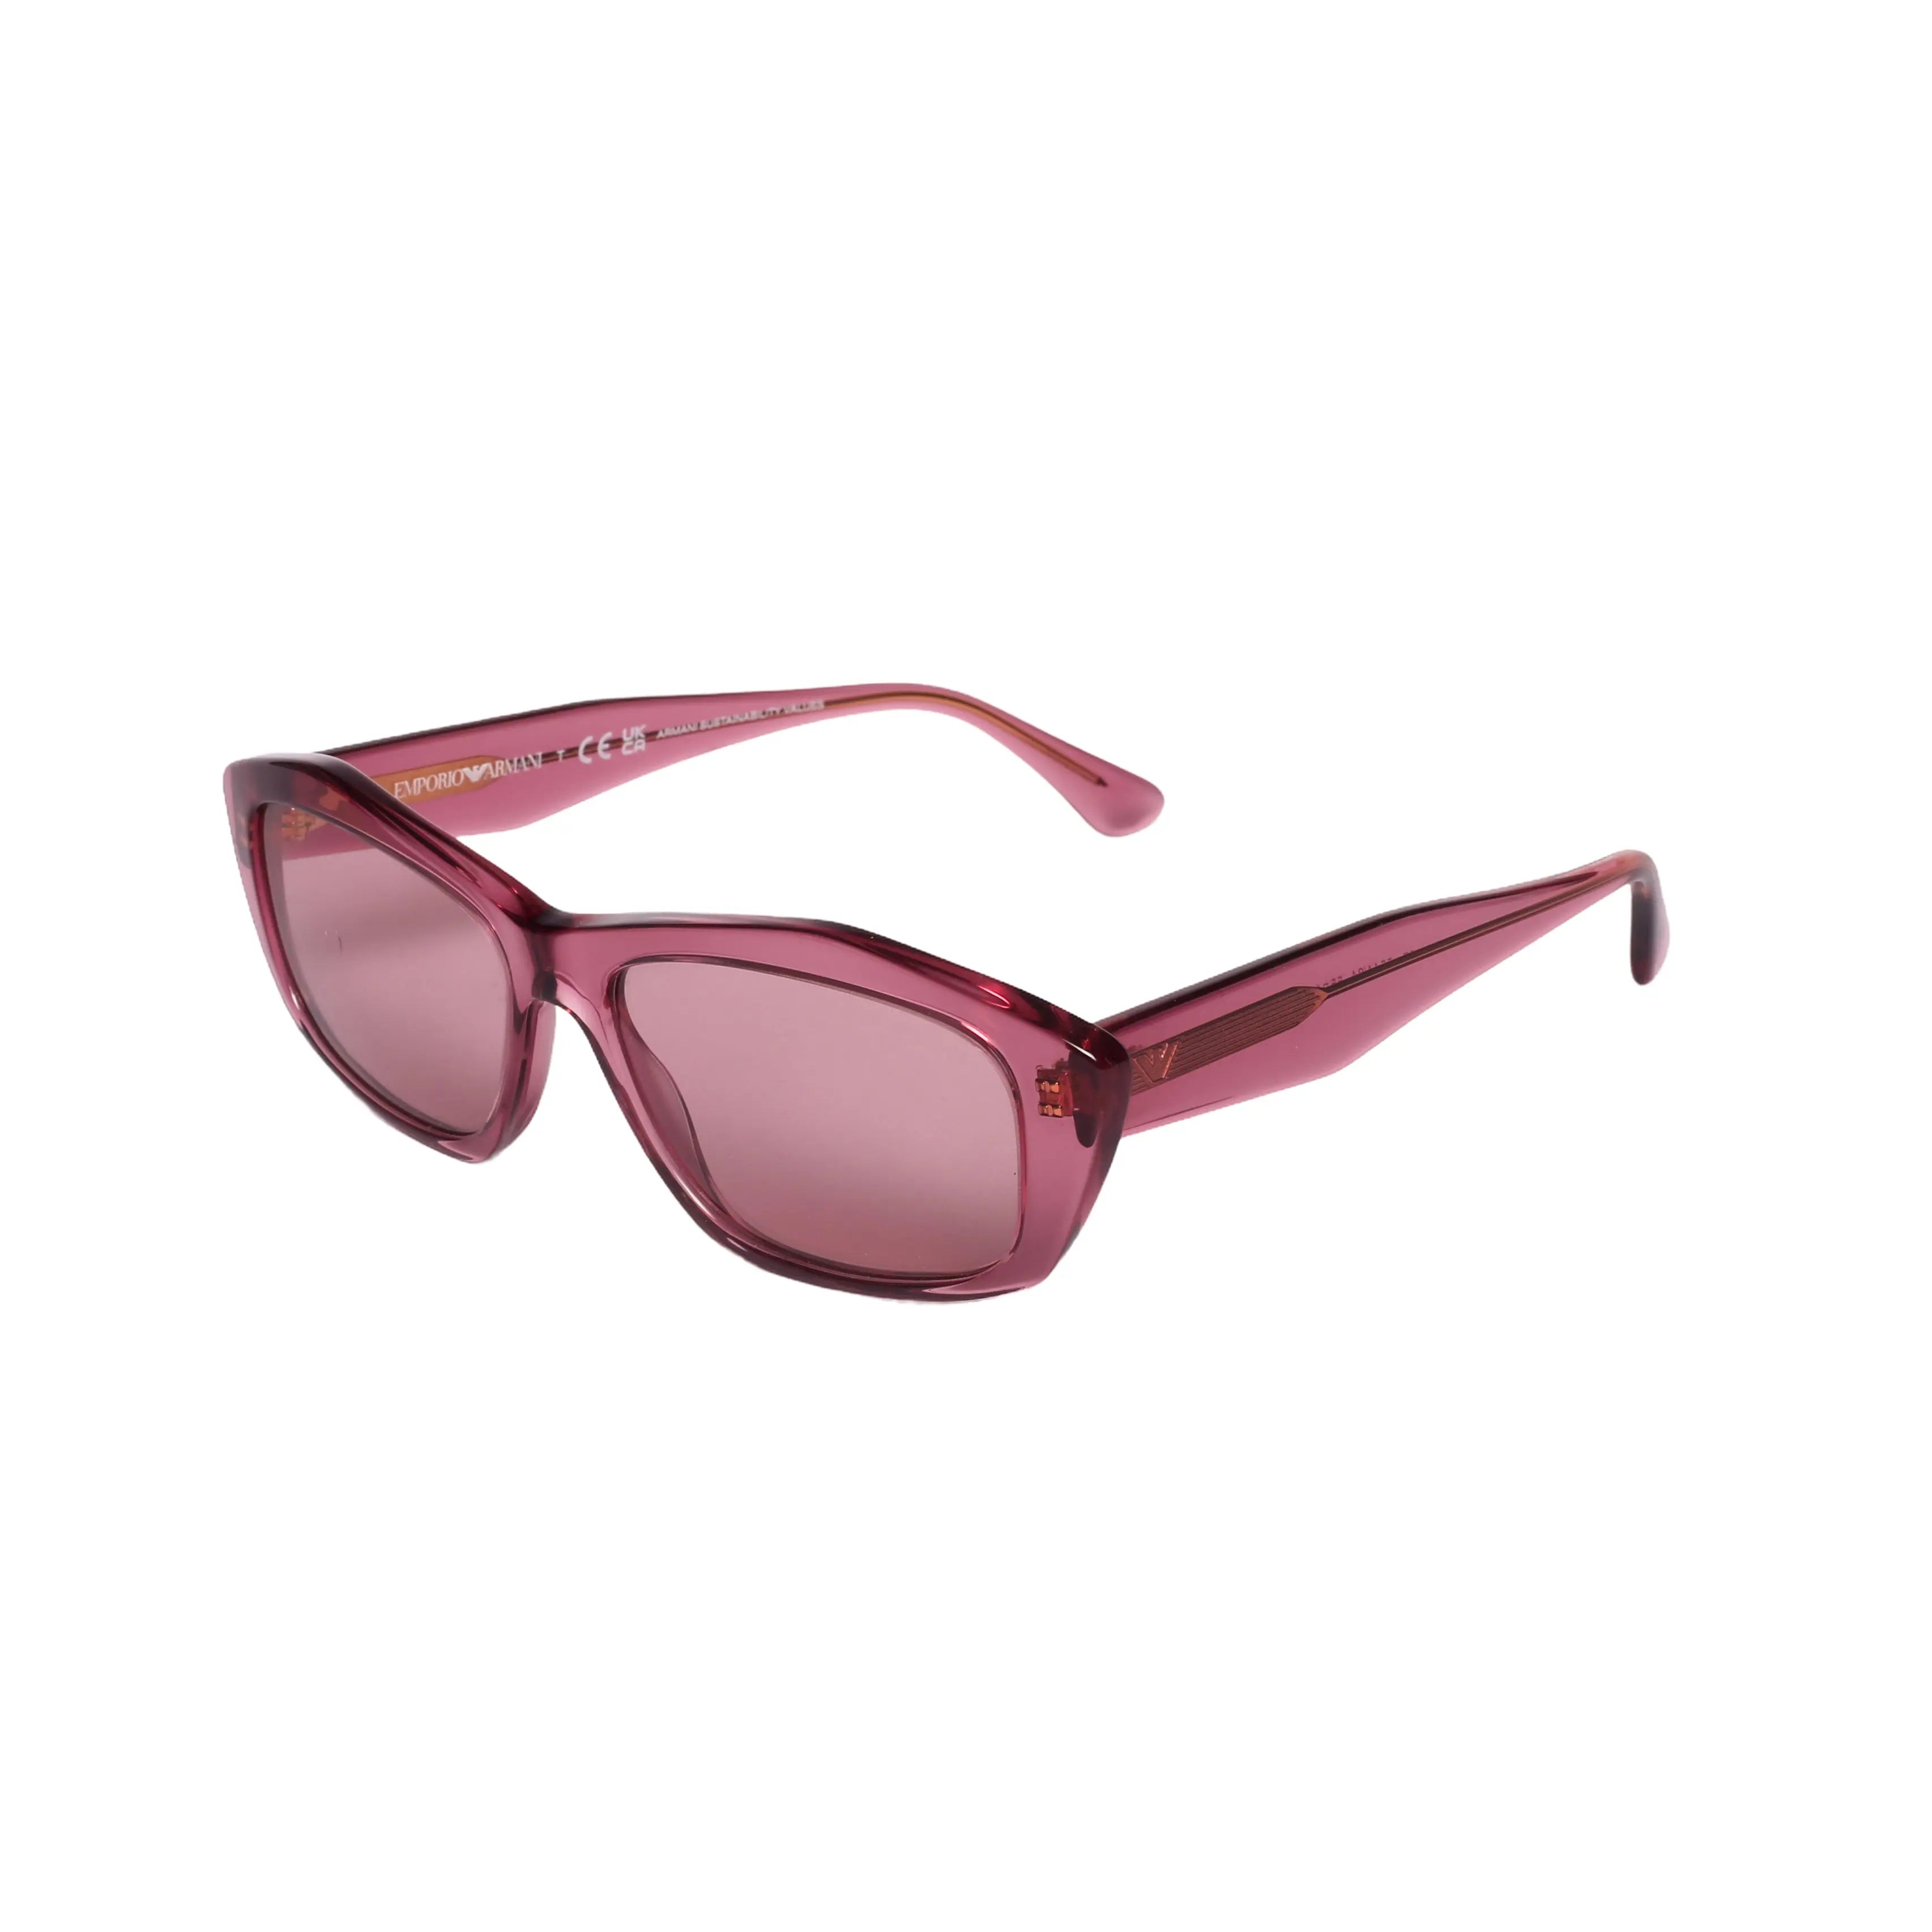 Emporio Armani-EA 4187-55-5544 Sunglasses - Premium Sunglasses from Emporio Armani - Just Rs. 12790! Shop now at Laxmi Opticians